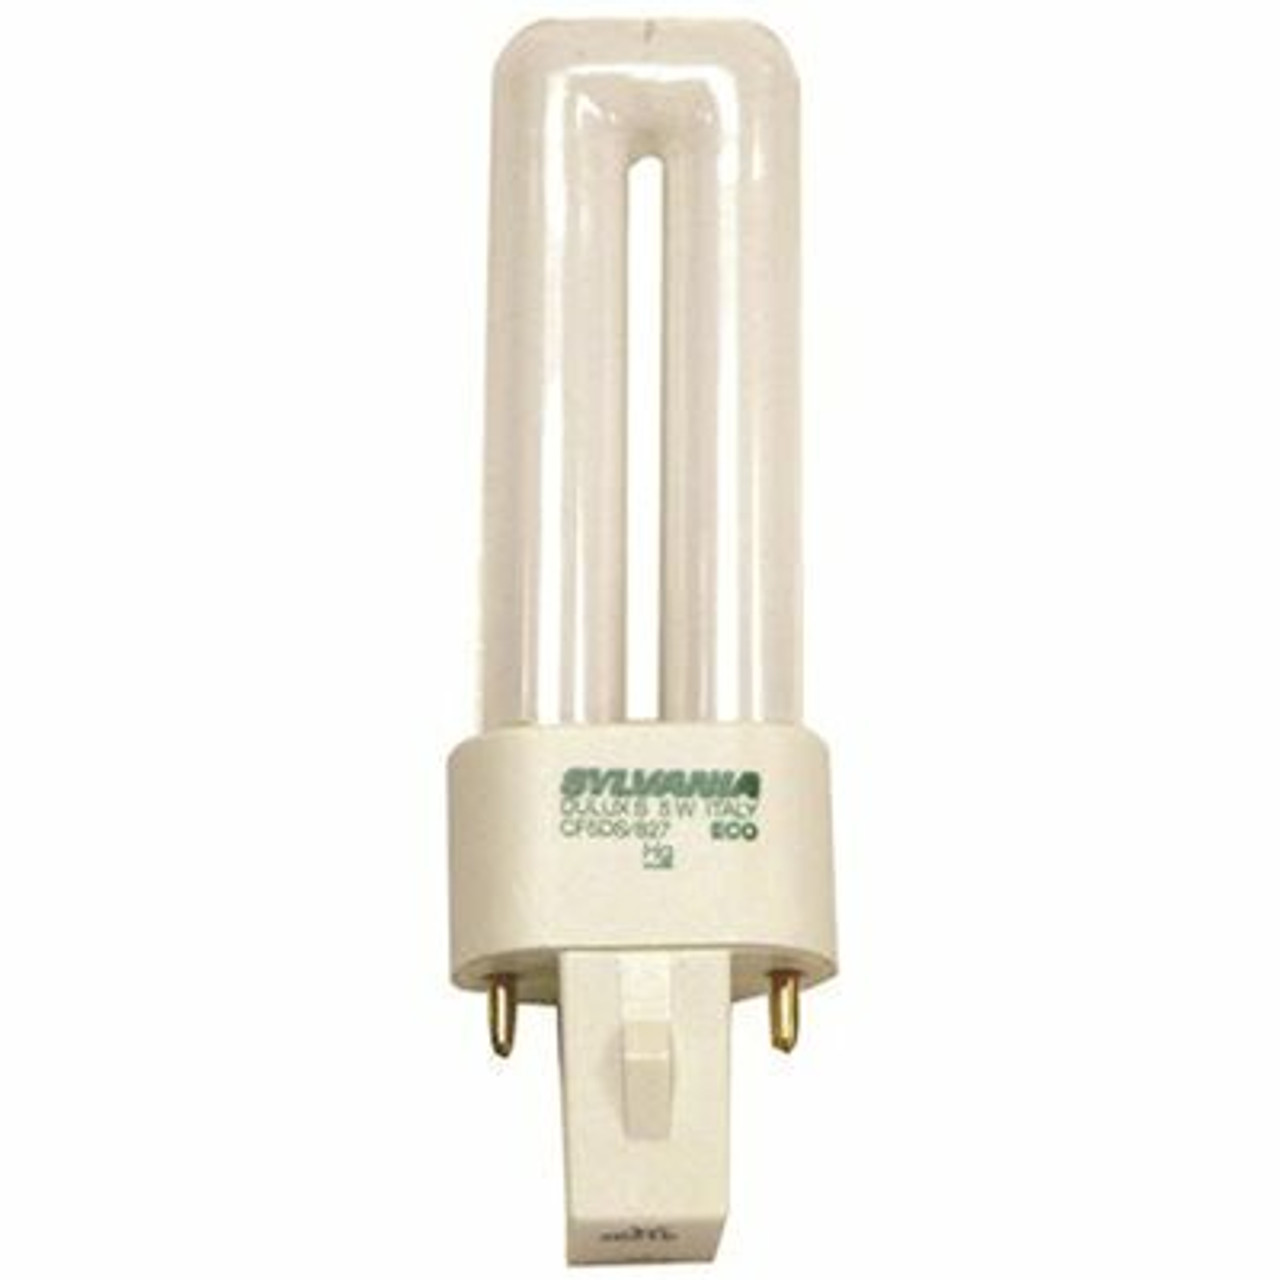 Sylvania 60-Watt Equivalent Cflni Energy Saving Cfl Light Bulb Bright White (50-Bulbs)